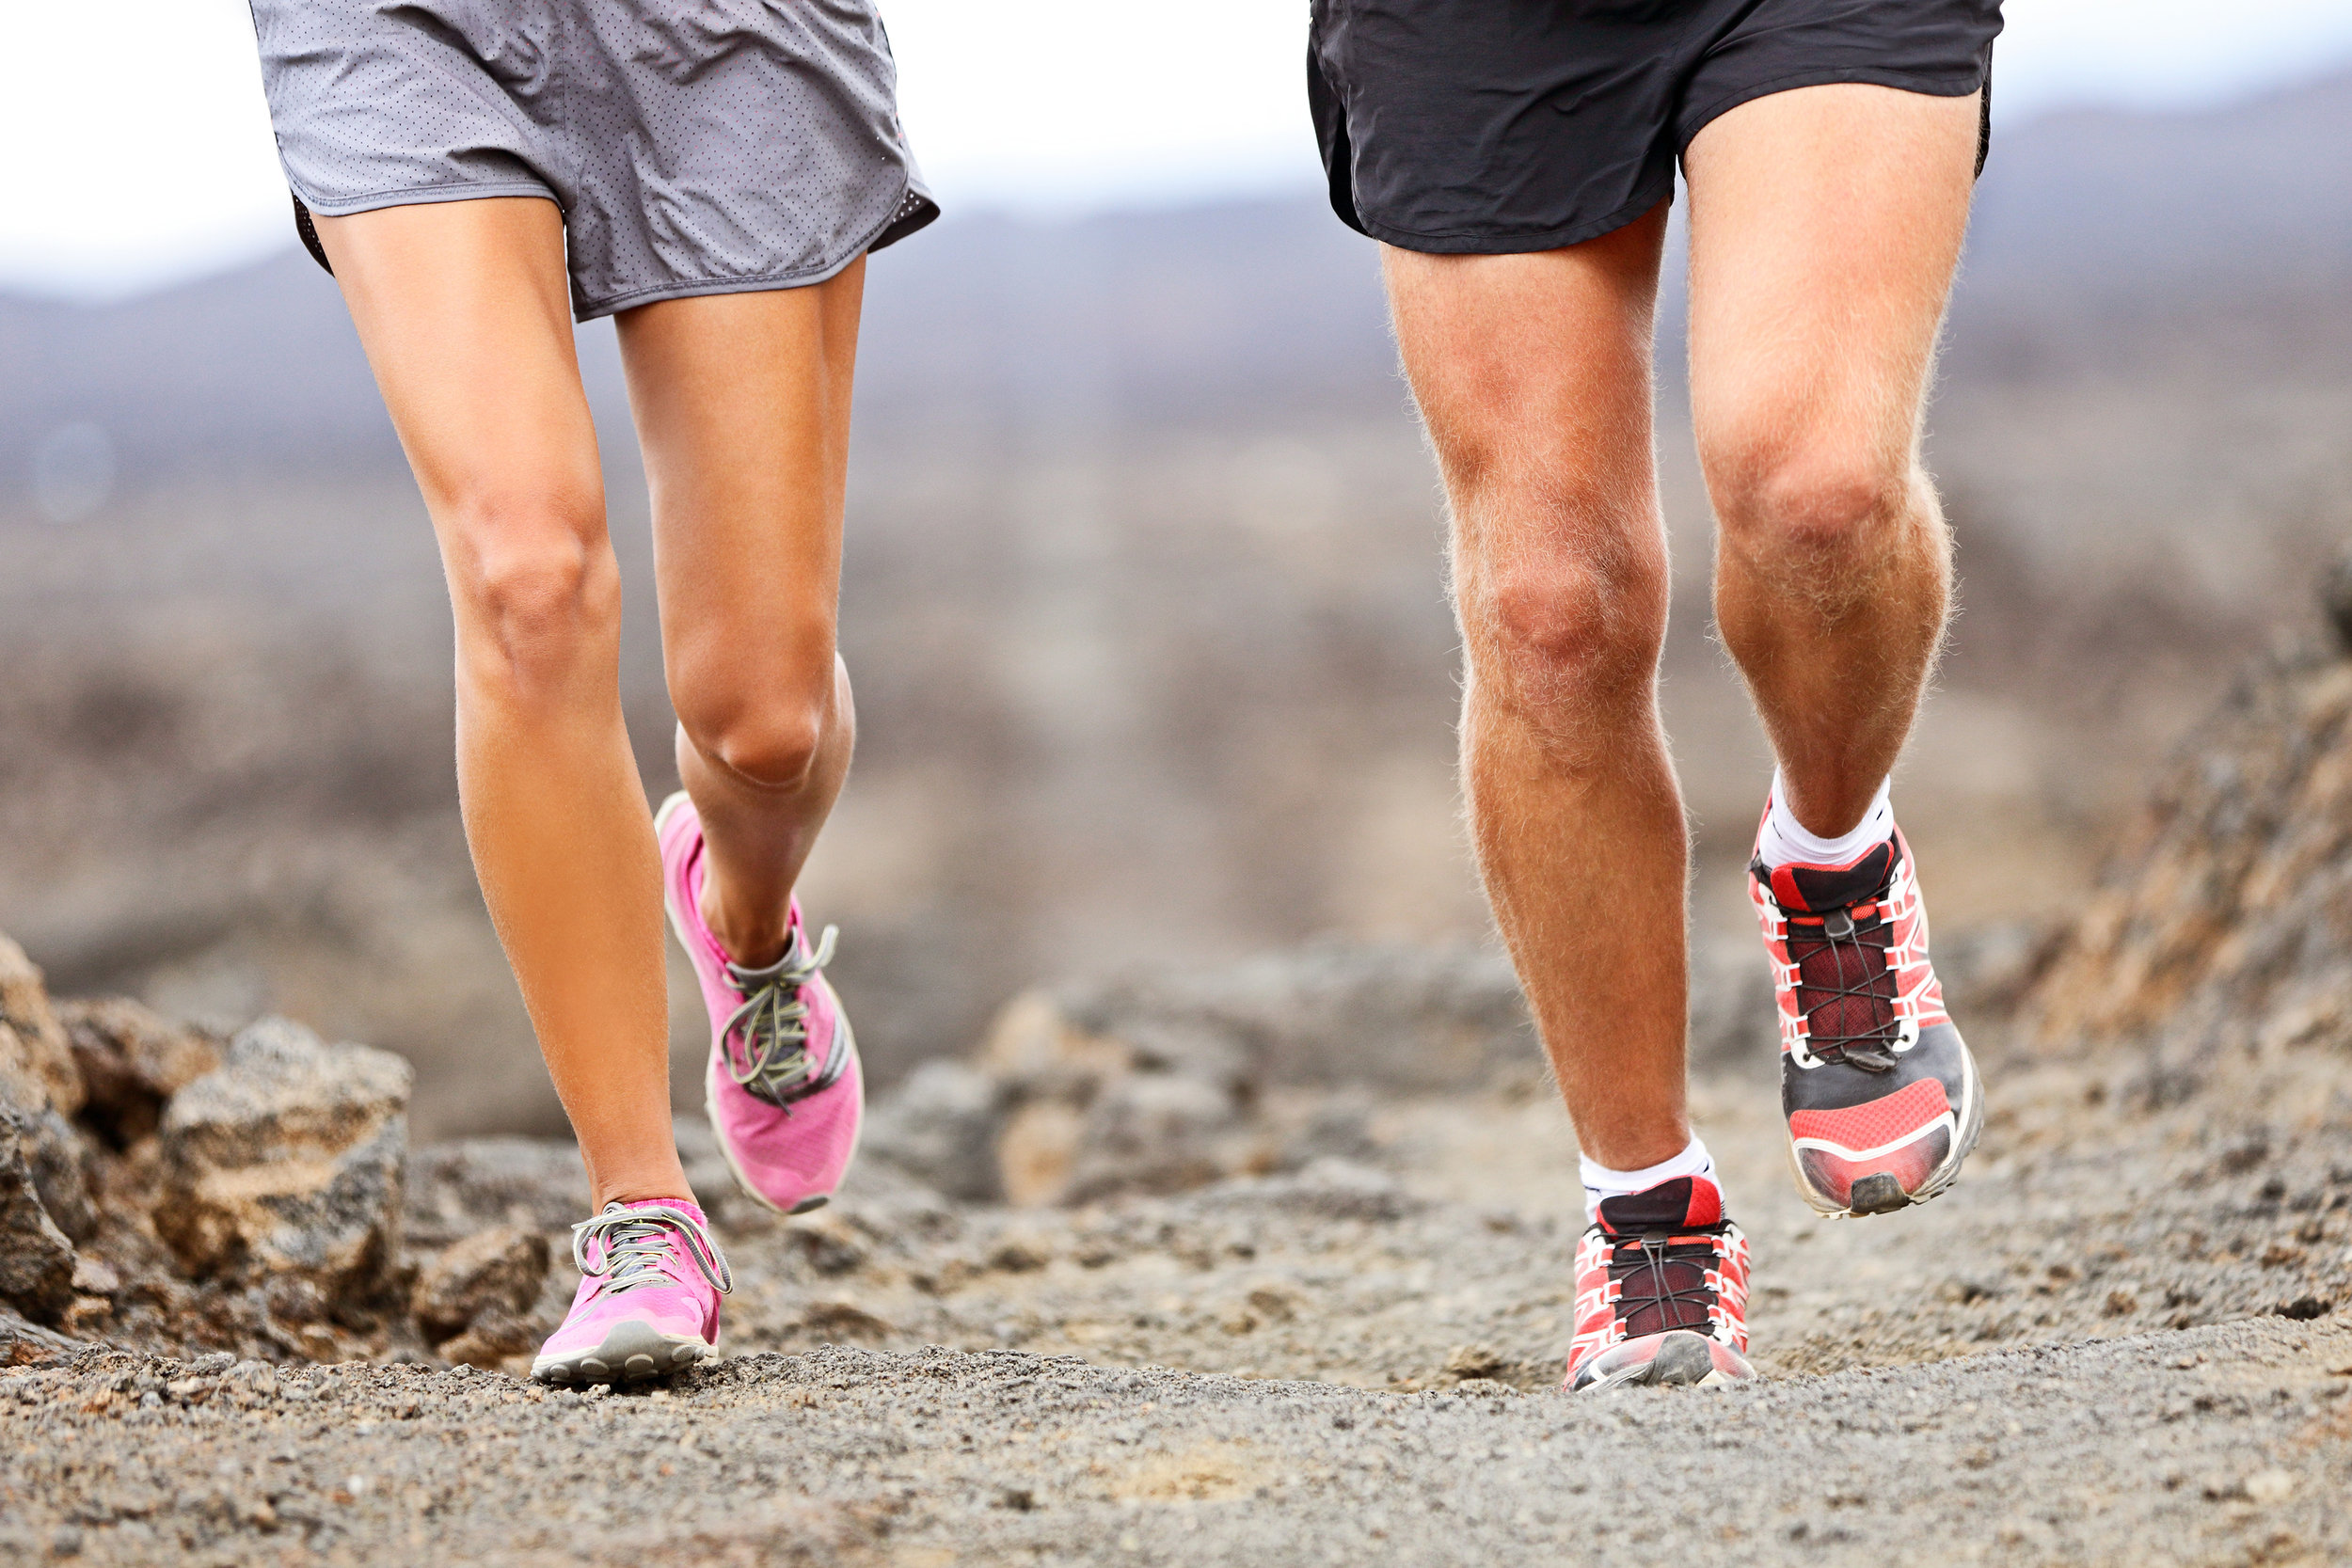 bigstock-Runners-running-shoes-on-trail-227561632.jpg